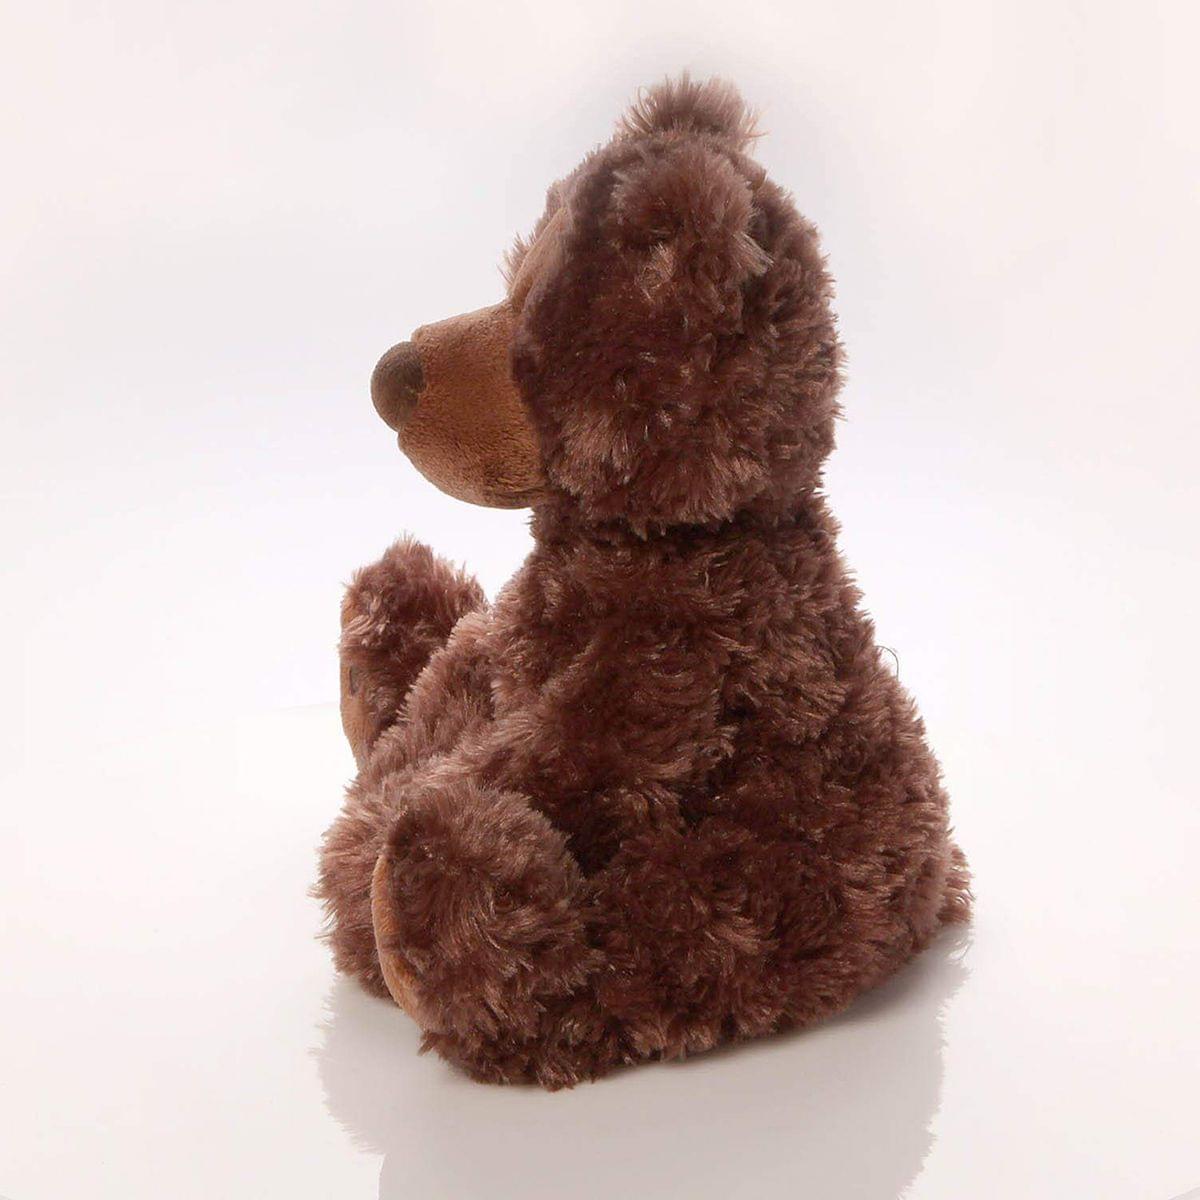 Philbin Teddy Bear 18-Inch Plush - Chocolate Brown